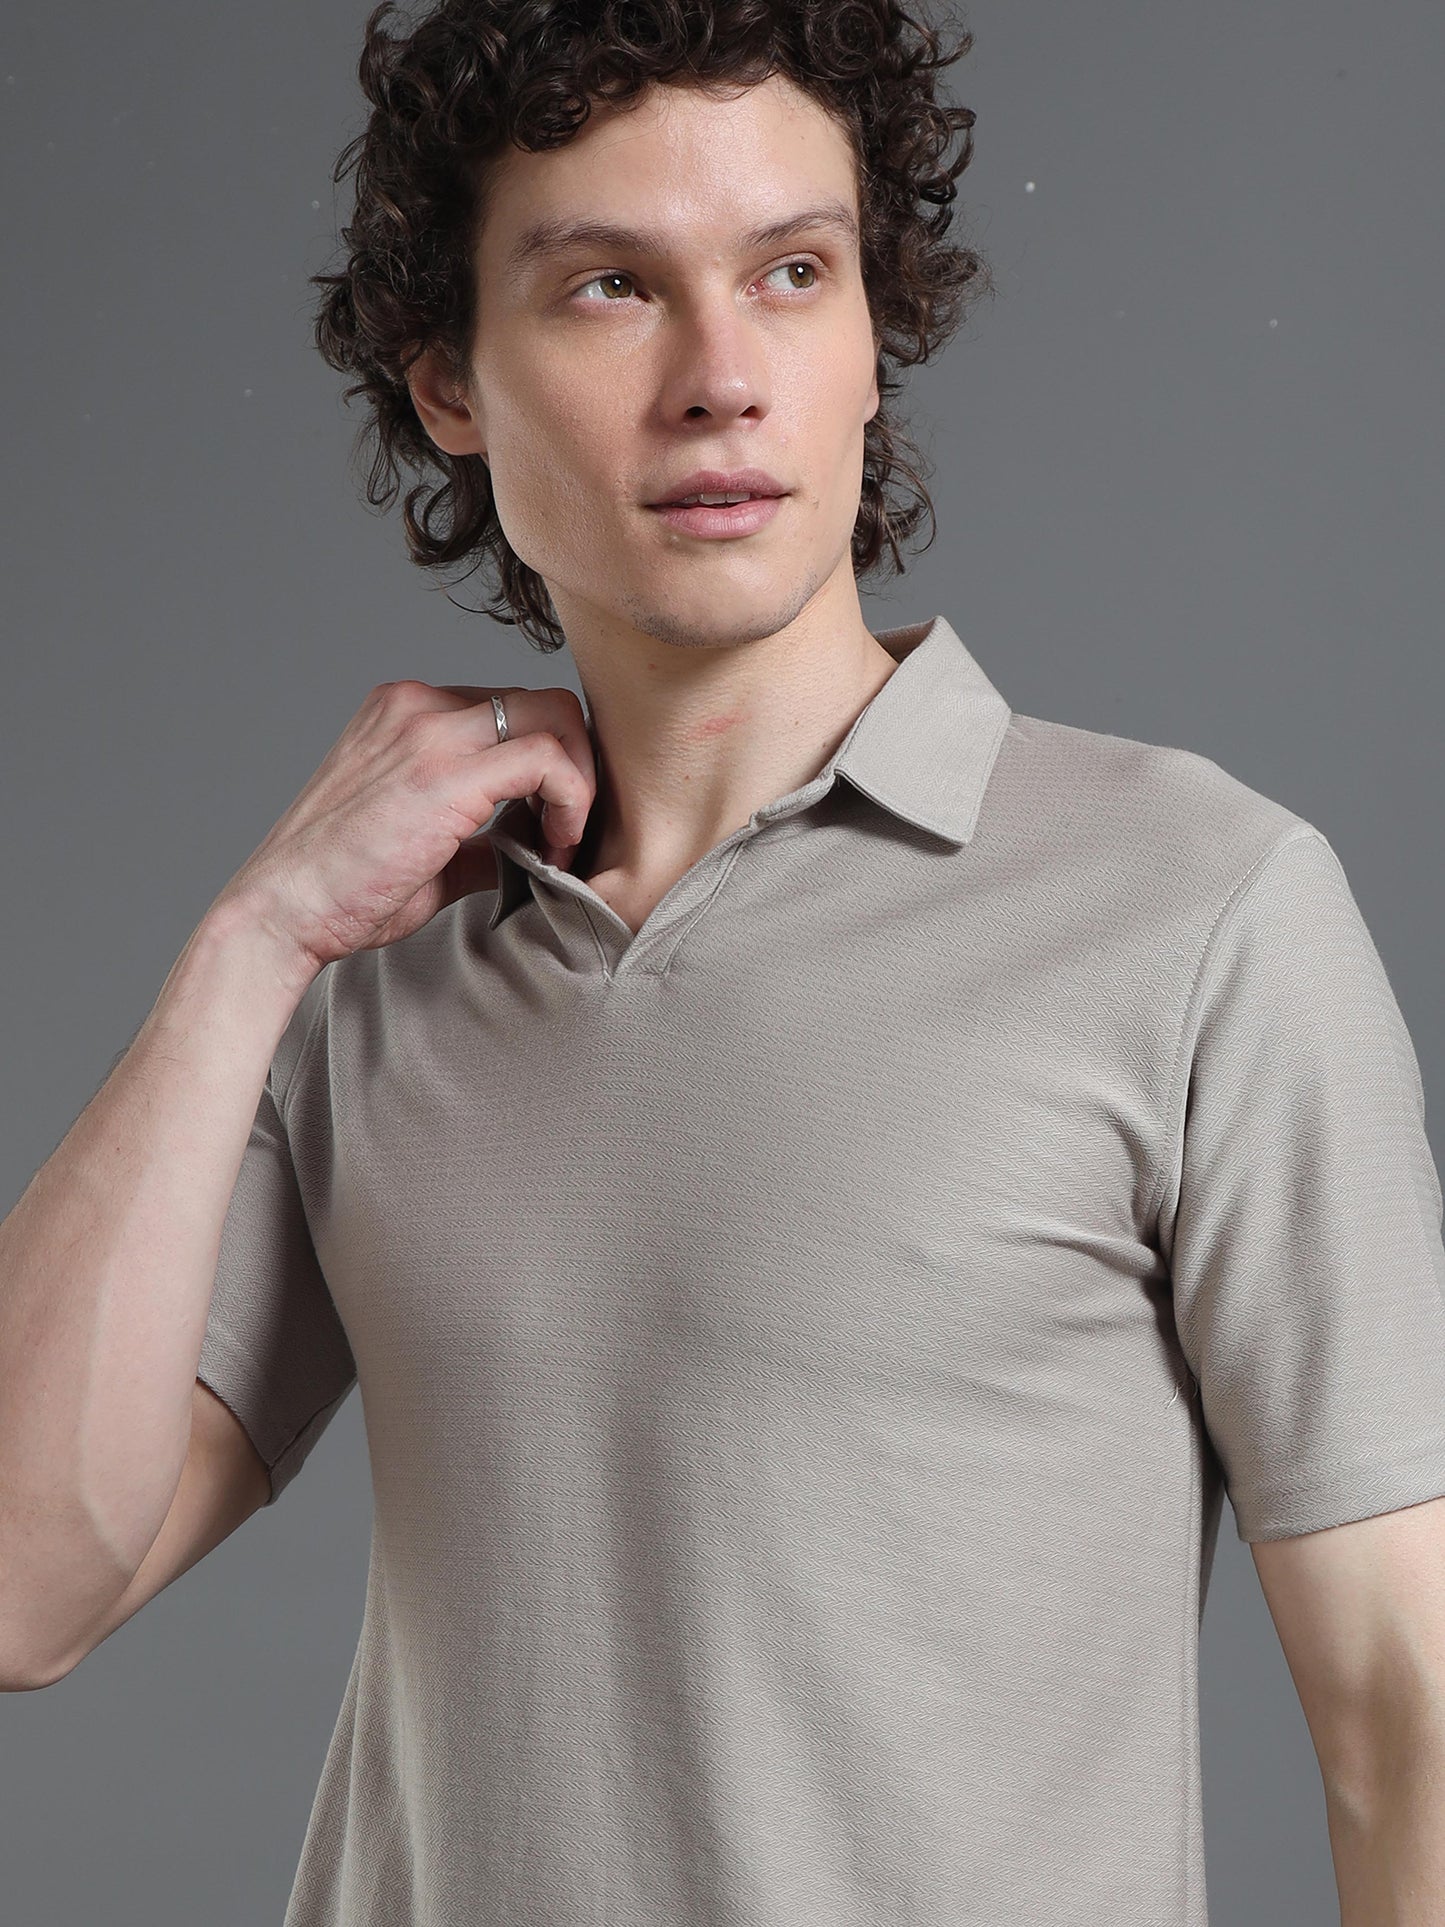 Grey Polo T Shirt for Men